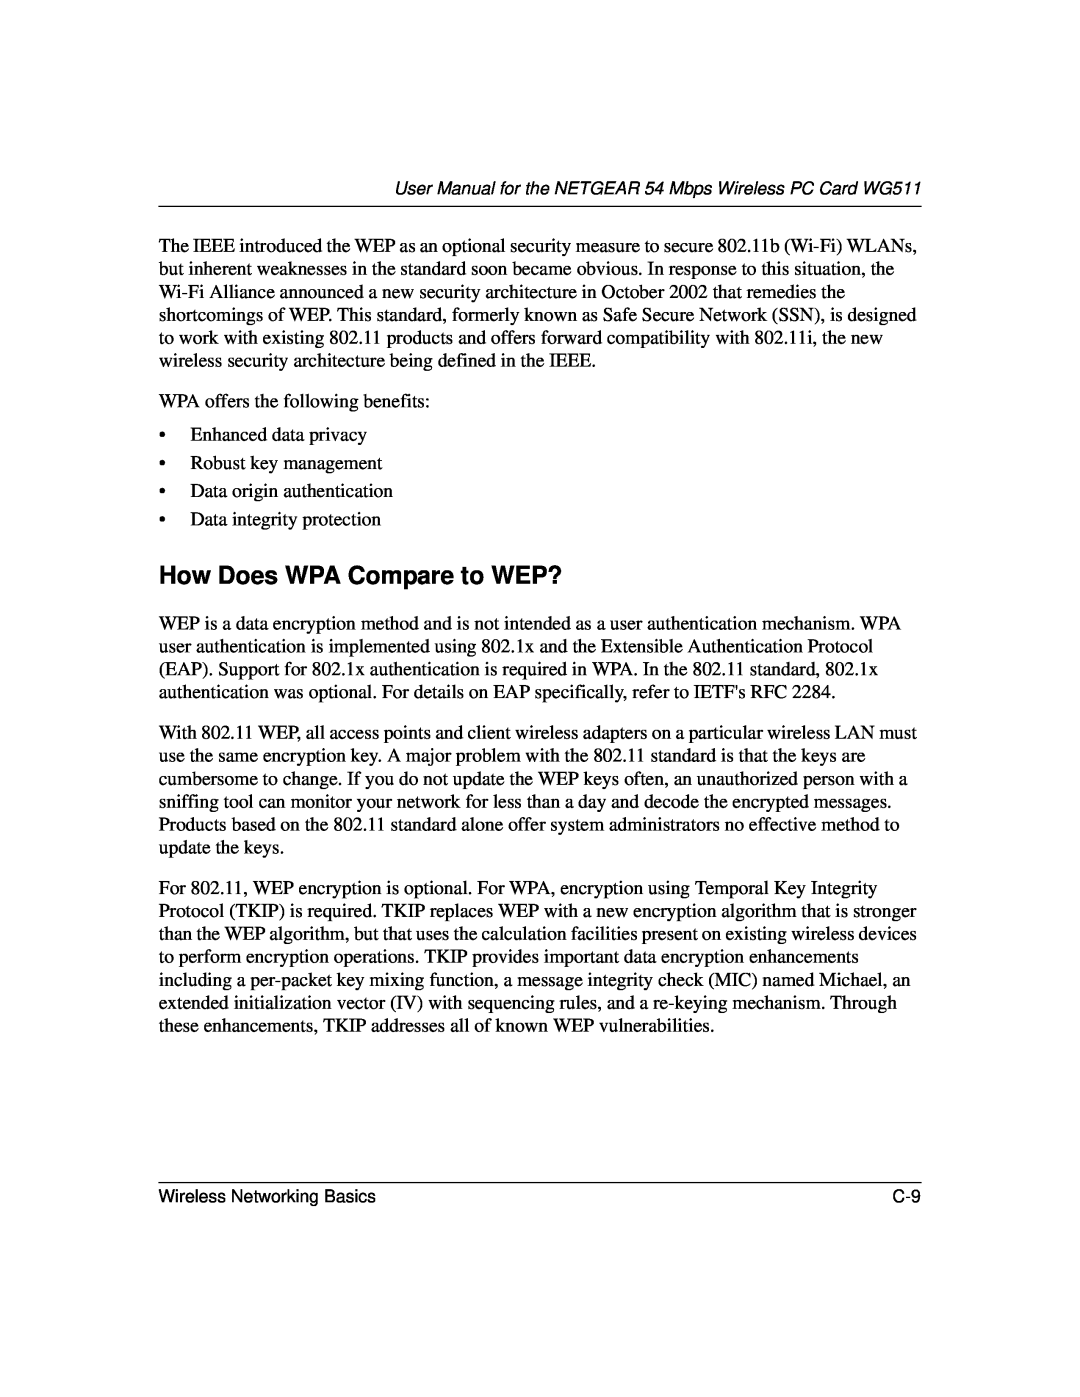 NETGEAR WGE111 user manual How Does WPA Compare to WEP? 